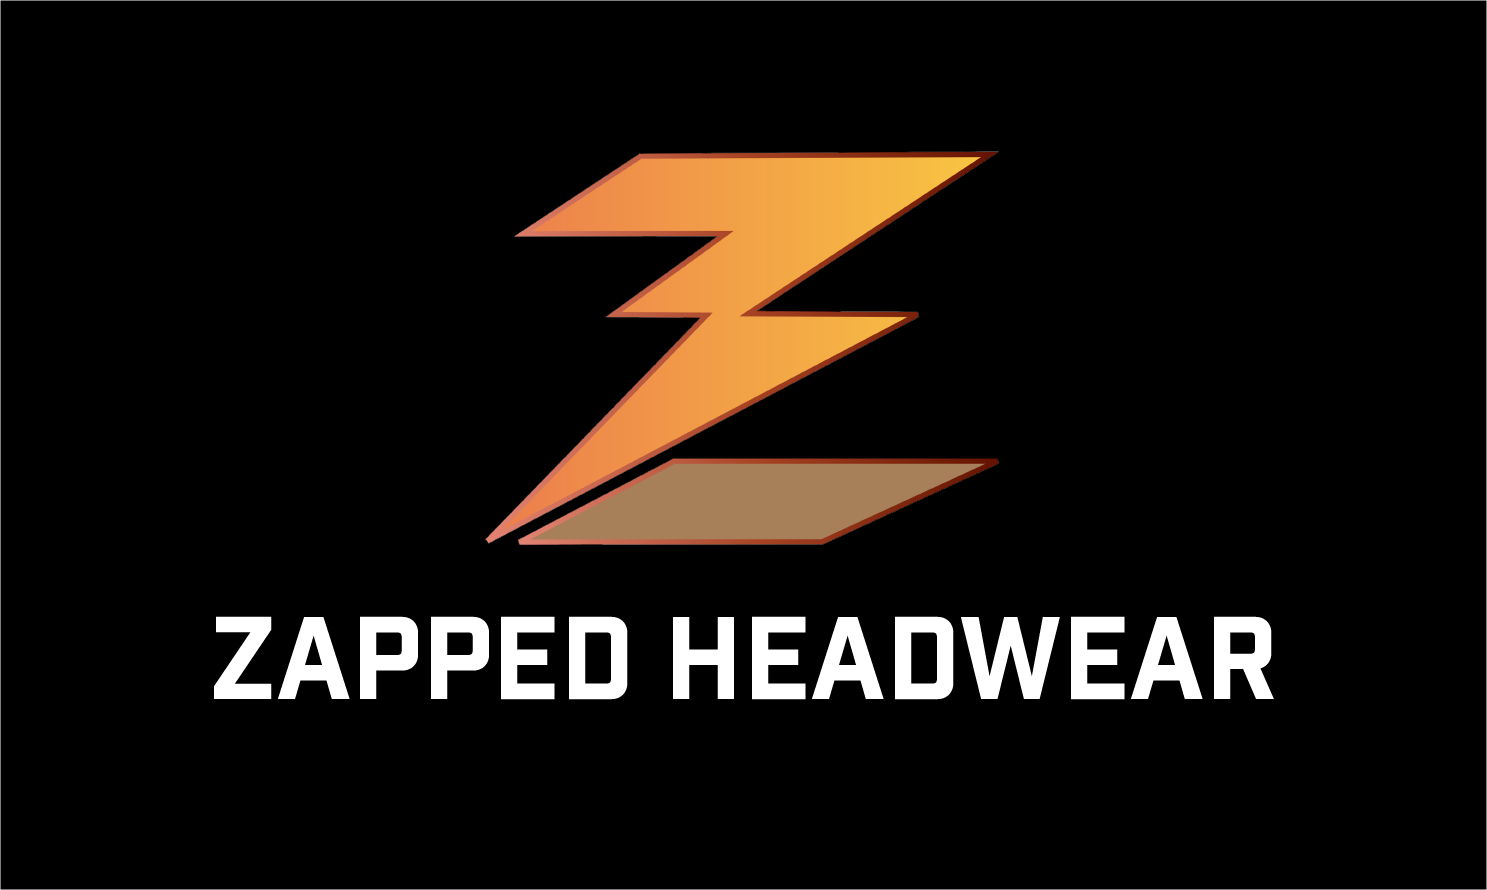 Zapped headwear giftcard